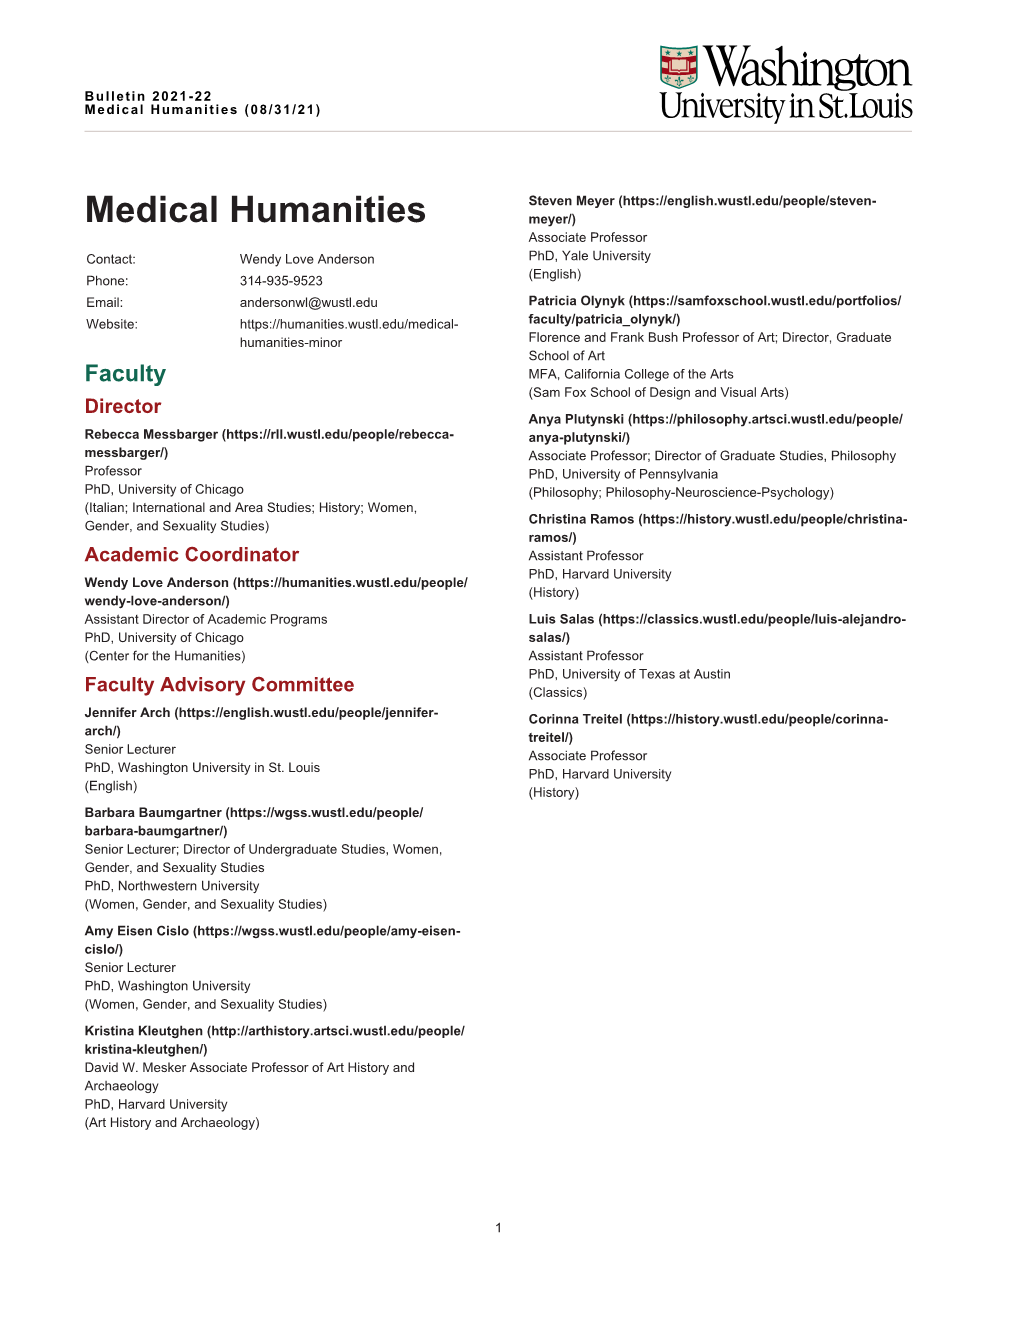 Medical Humanities (08/31/21)